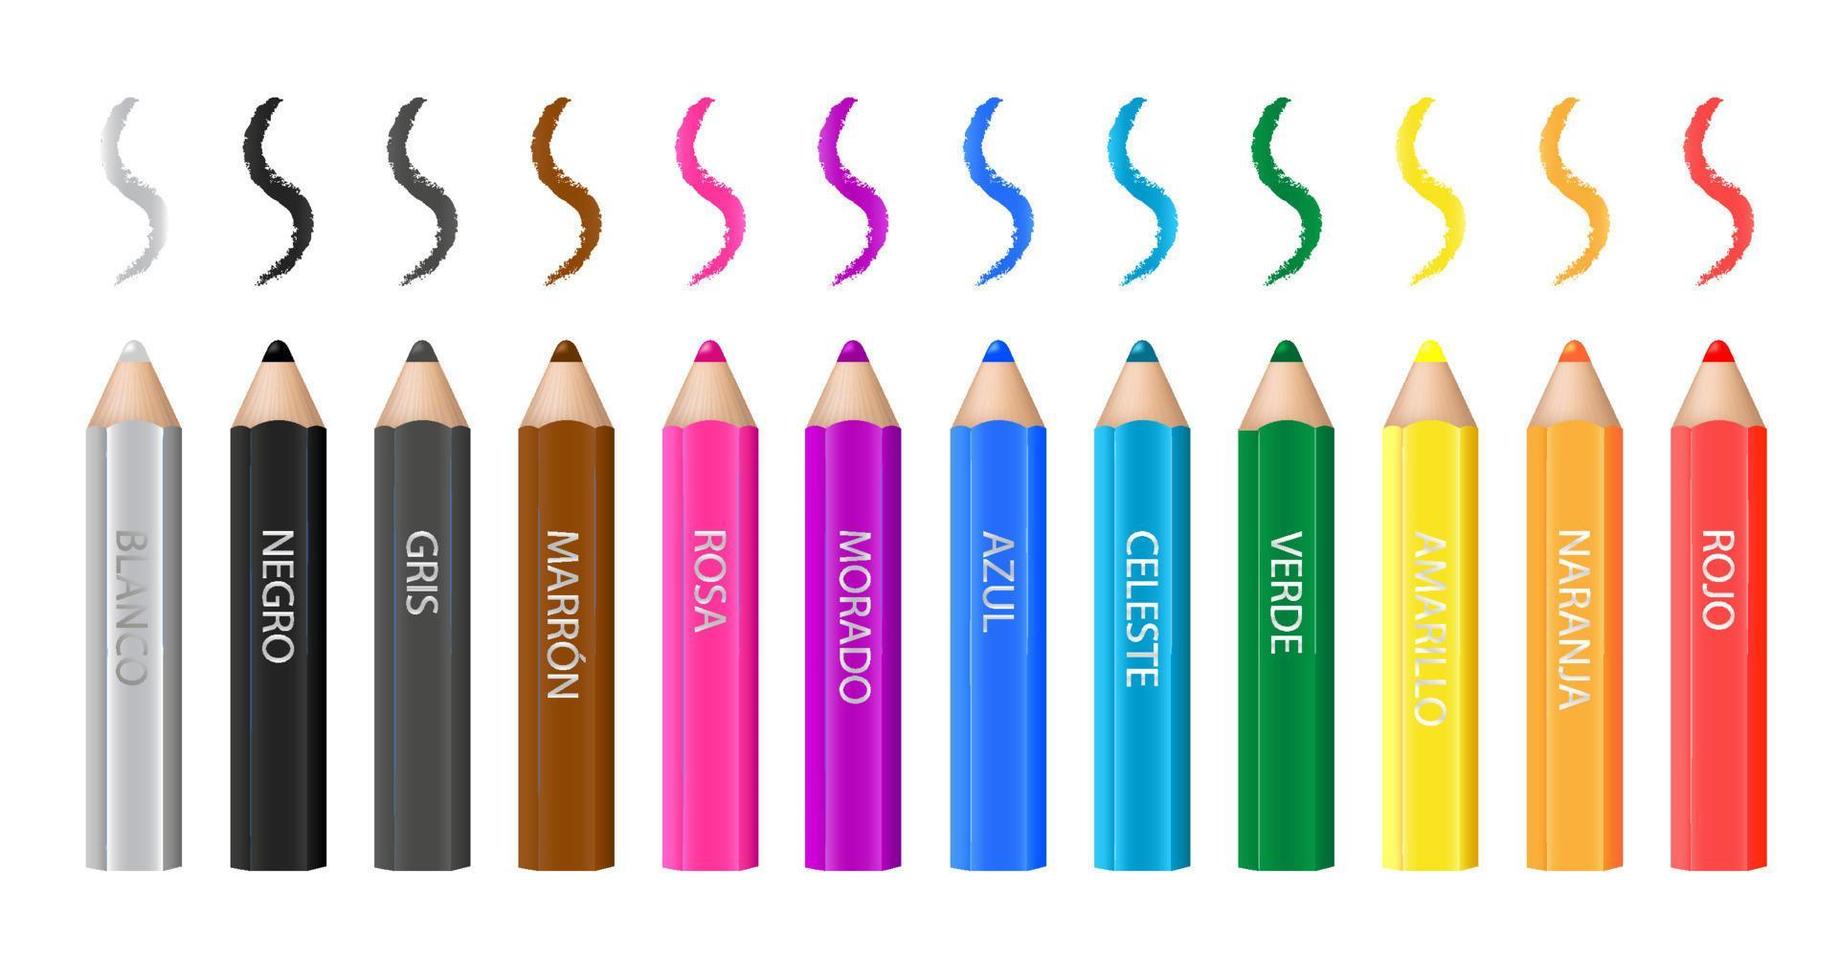 12 multicolor wooden pencils and strokes. White background. Names of colors in spanish - rojo, naranja, amarillo, verde, celeste, azul, morado, rosa, marron, gris, negro, blanco.  Vector design.